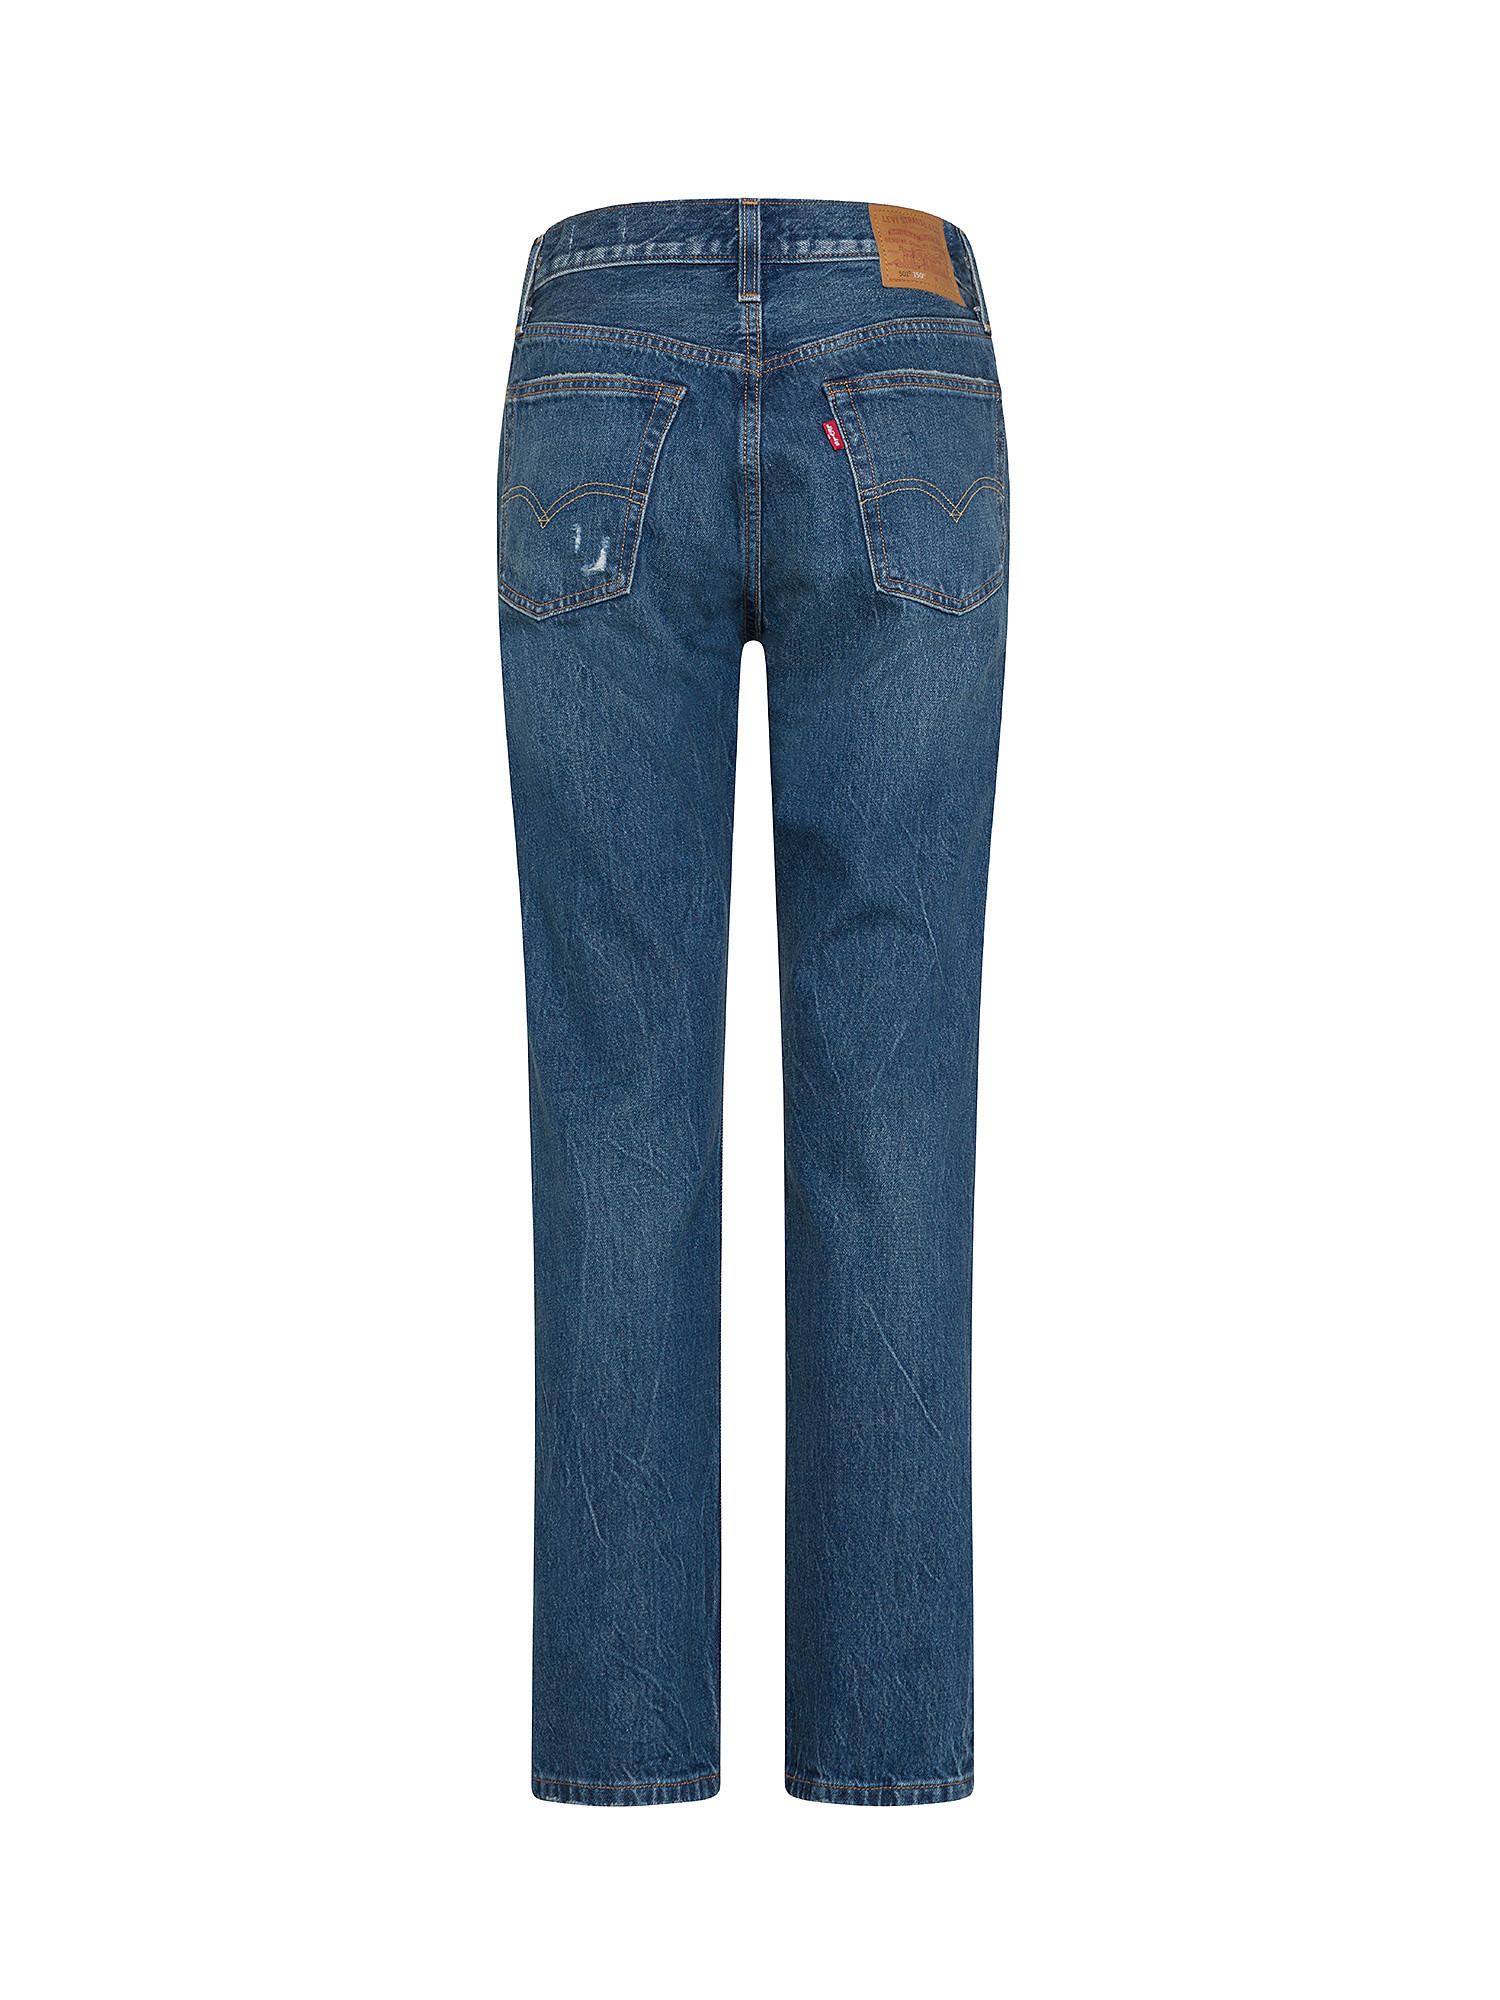 Levi's - jeans 501® original con cimosa, Denim, large image number 1